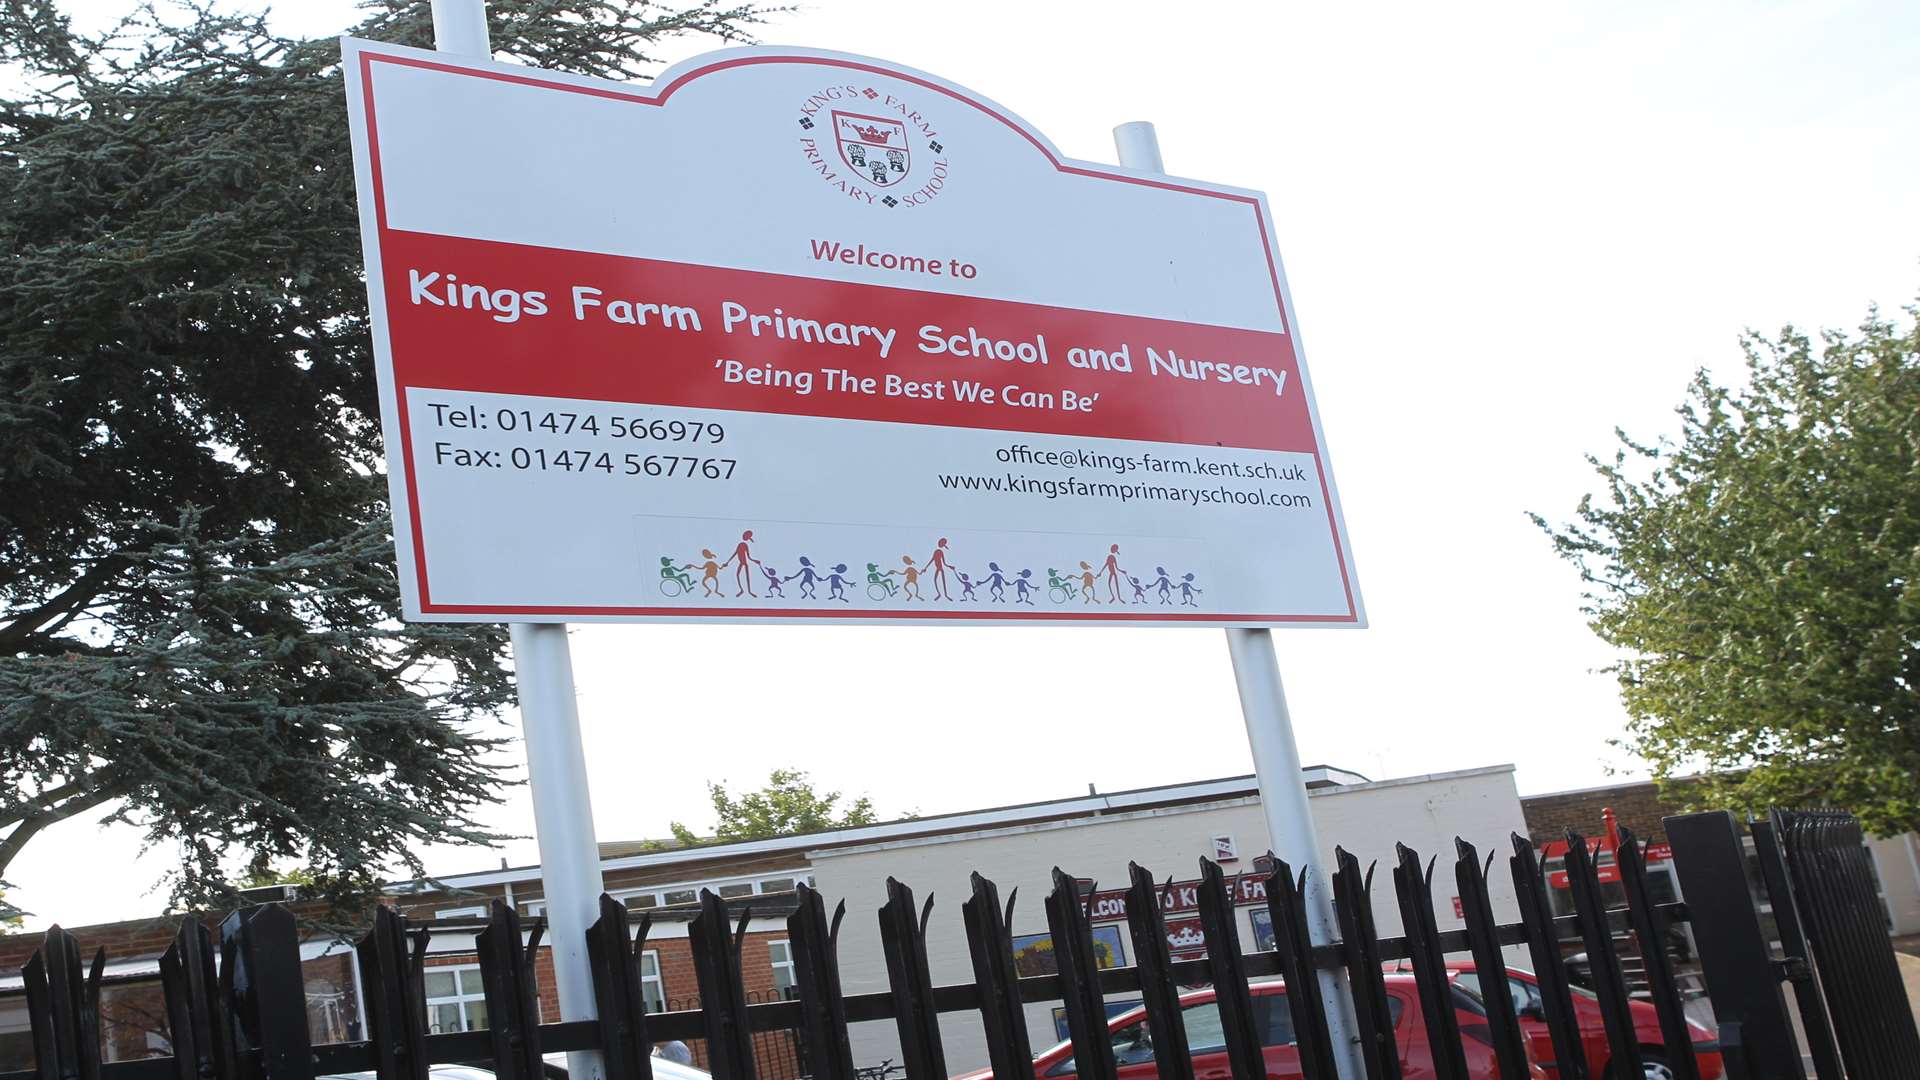 Kings Farm Primary School